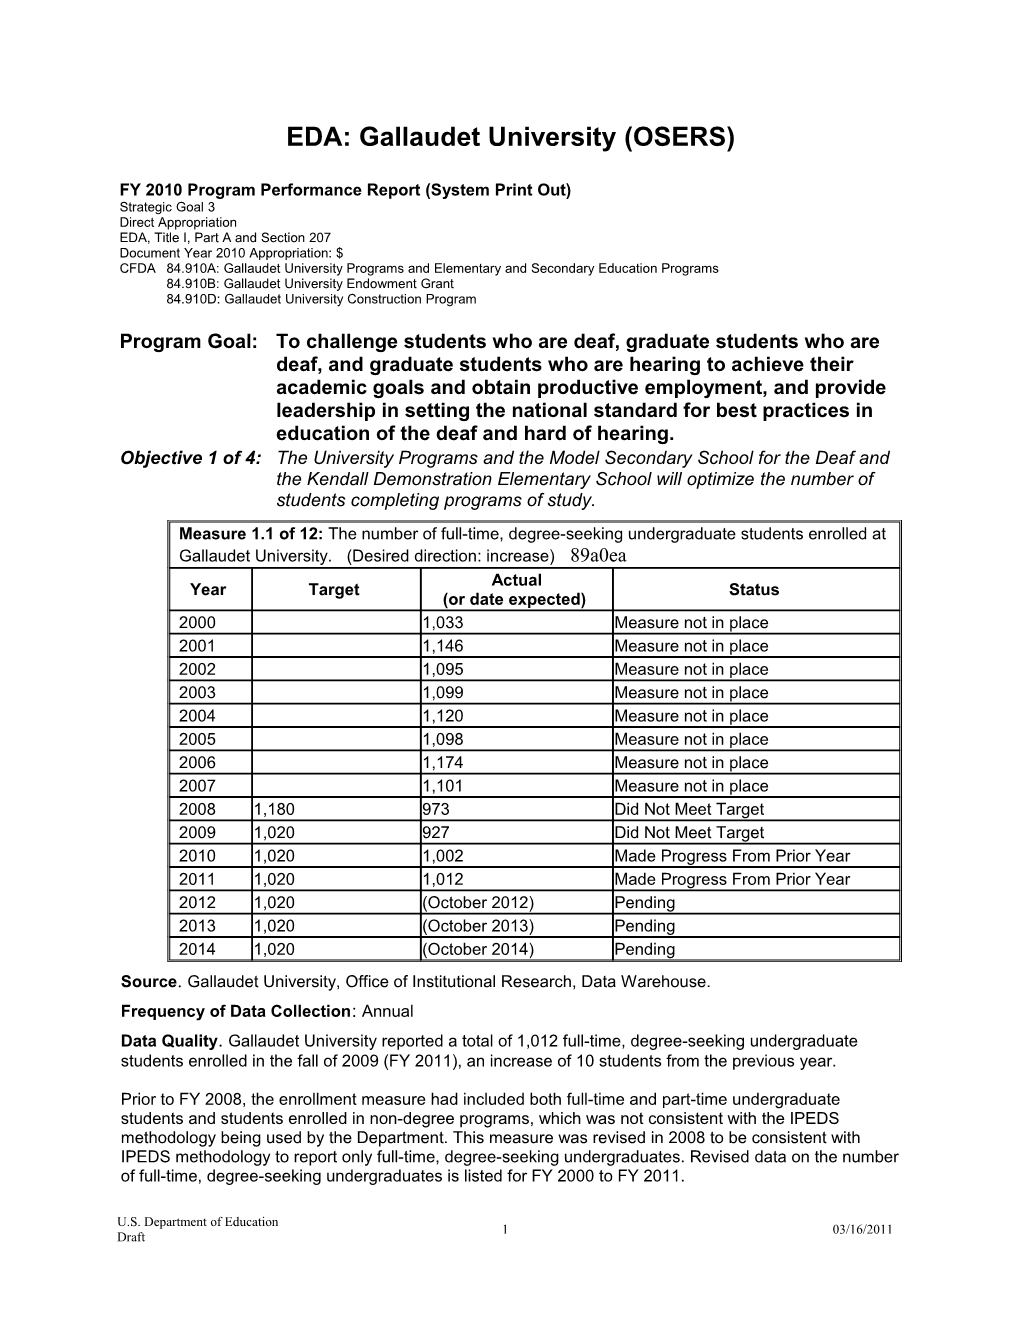 EDA: Gallaudet University (OSERS) FY 2010 Program Performance Report (MS Word)